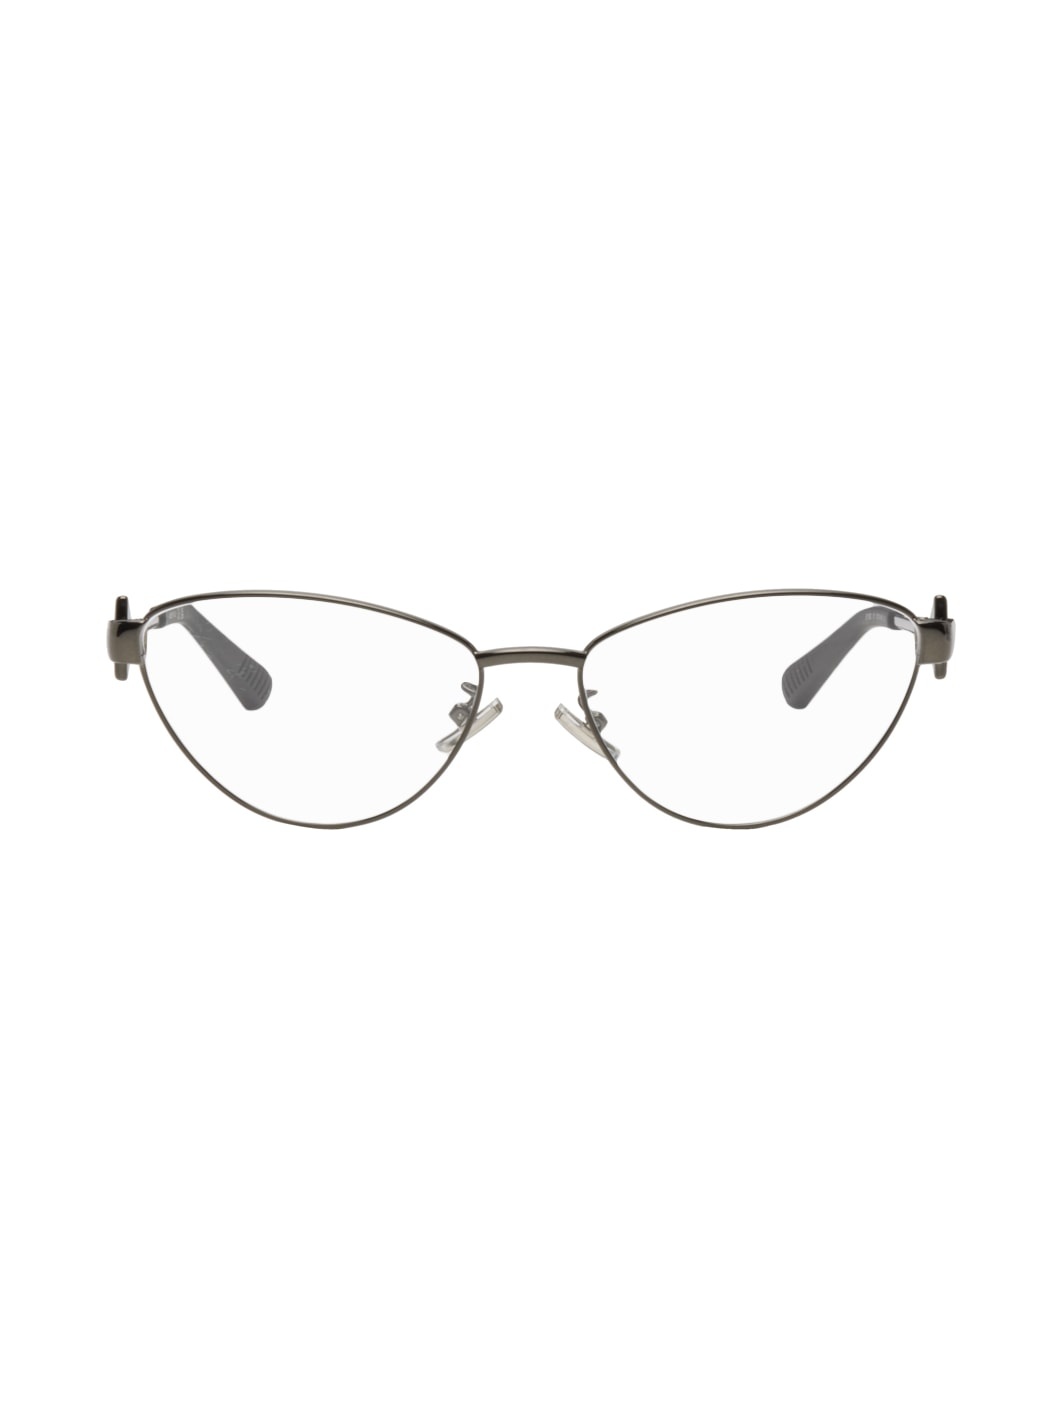 Gunmetal Cat-Eye Glasses - 1